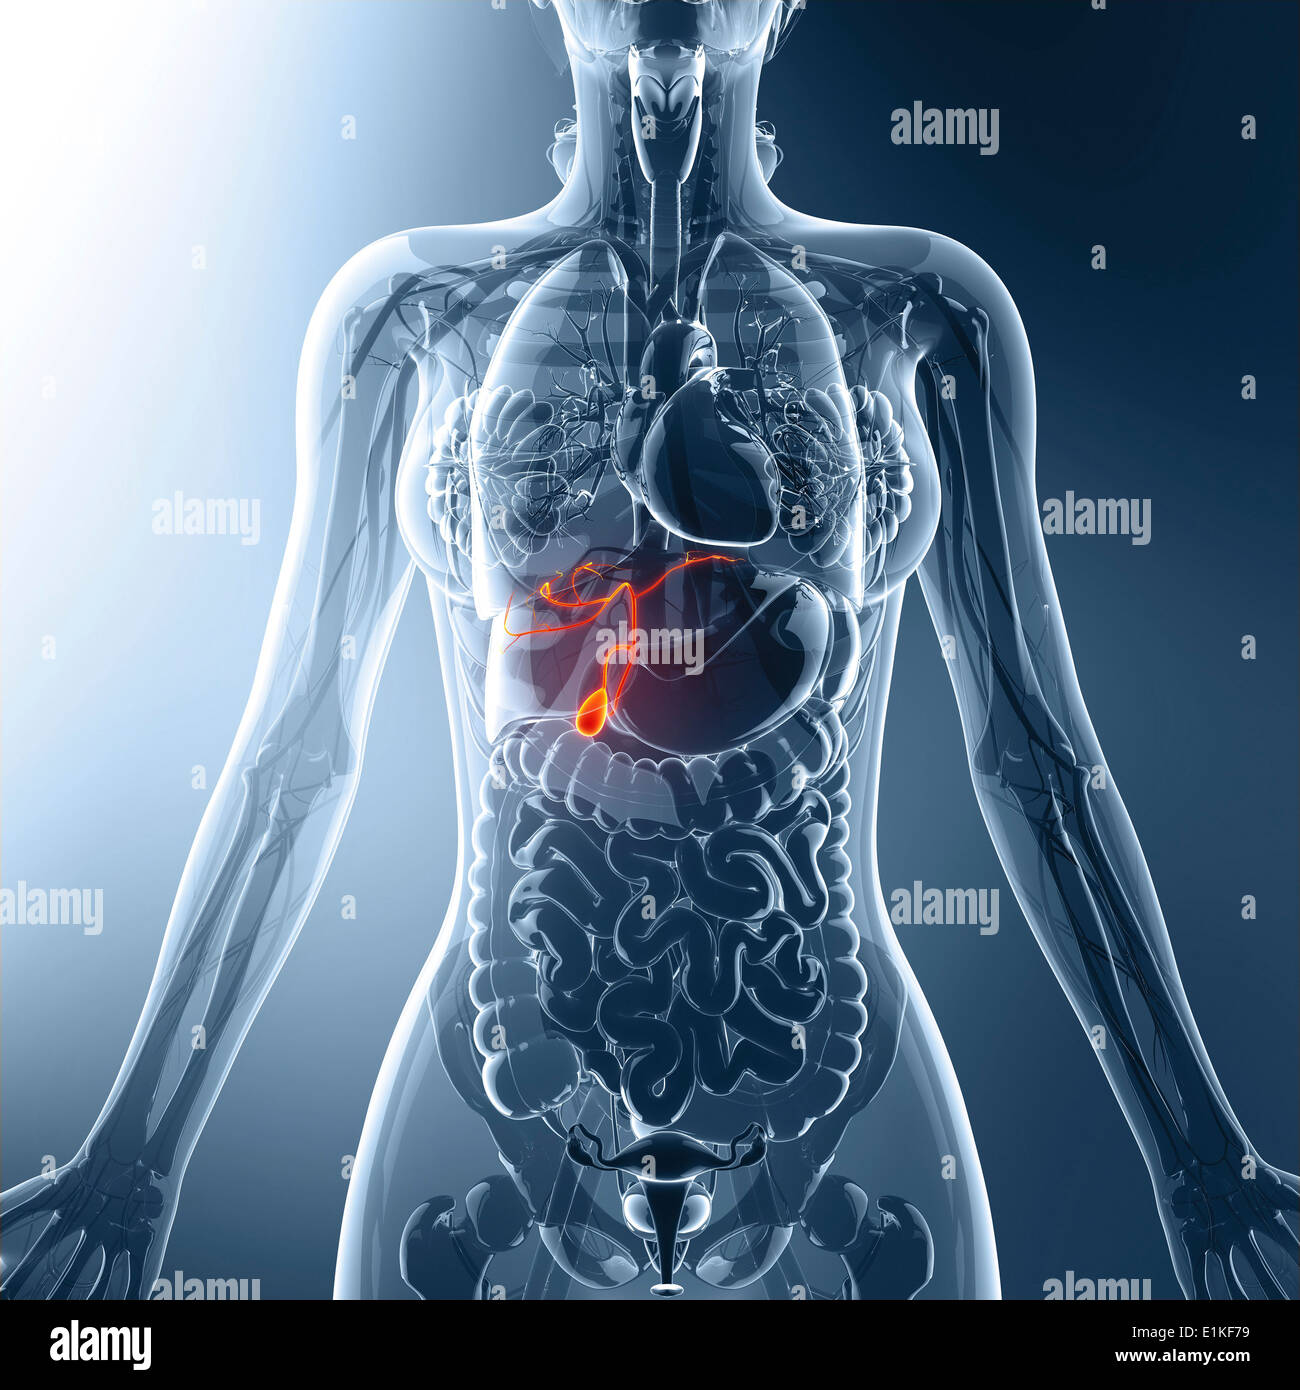 Human gall bladder computer artwork Stock Photo - Alamy